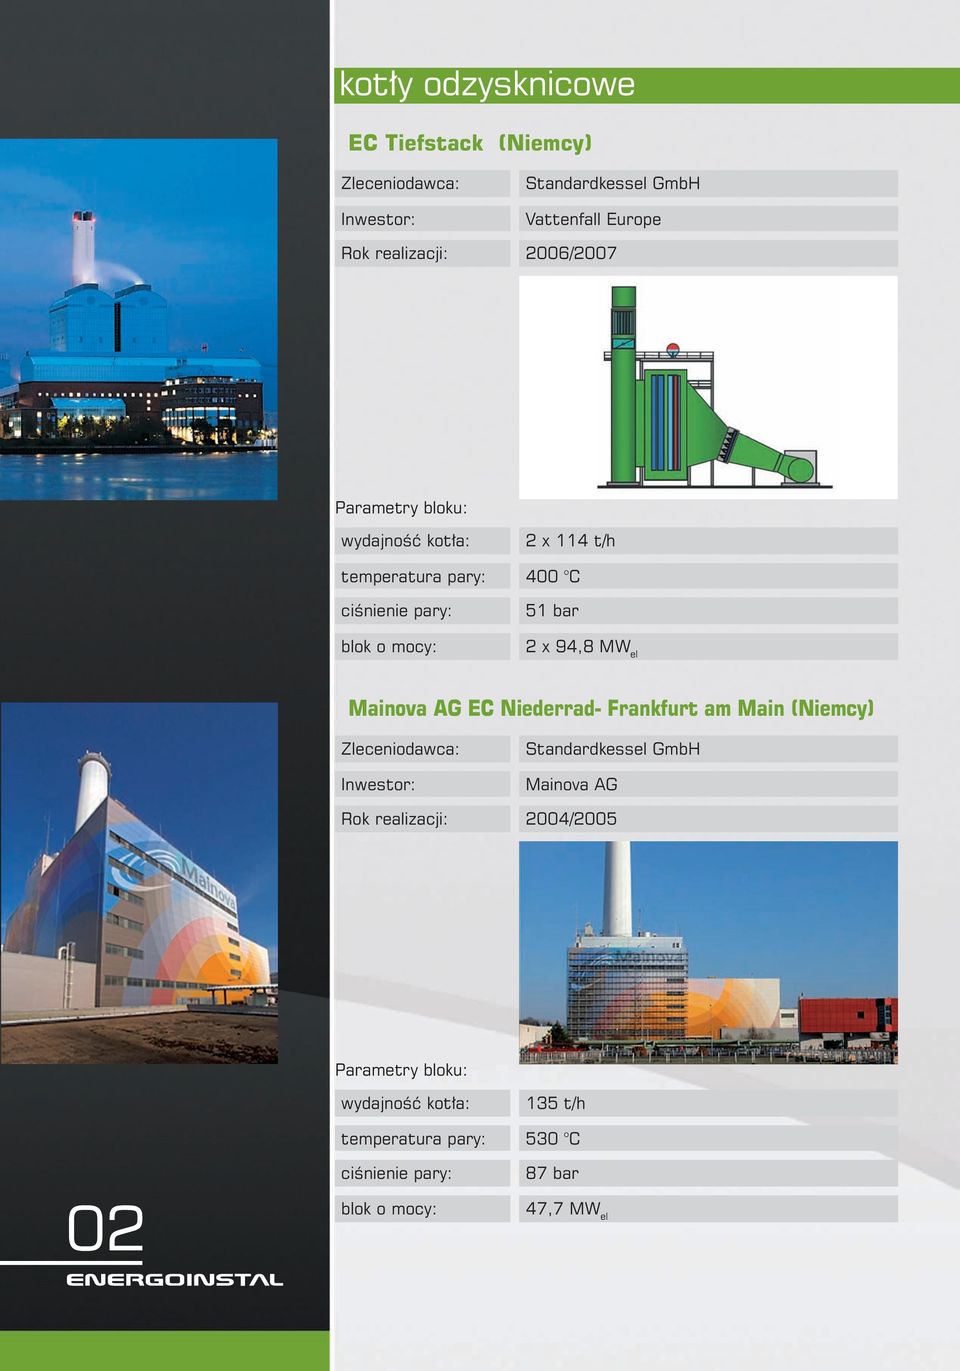 94,8 MW el Mainova AG EC Niederrad- Frankfurt am Main (Niemcy) Mainova